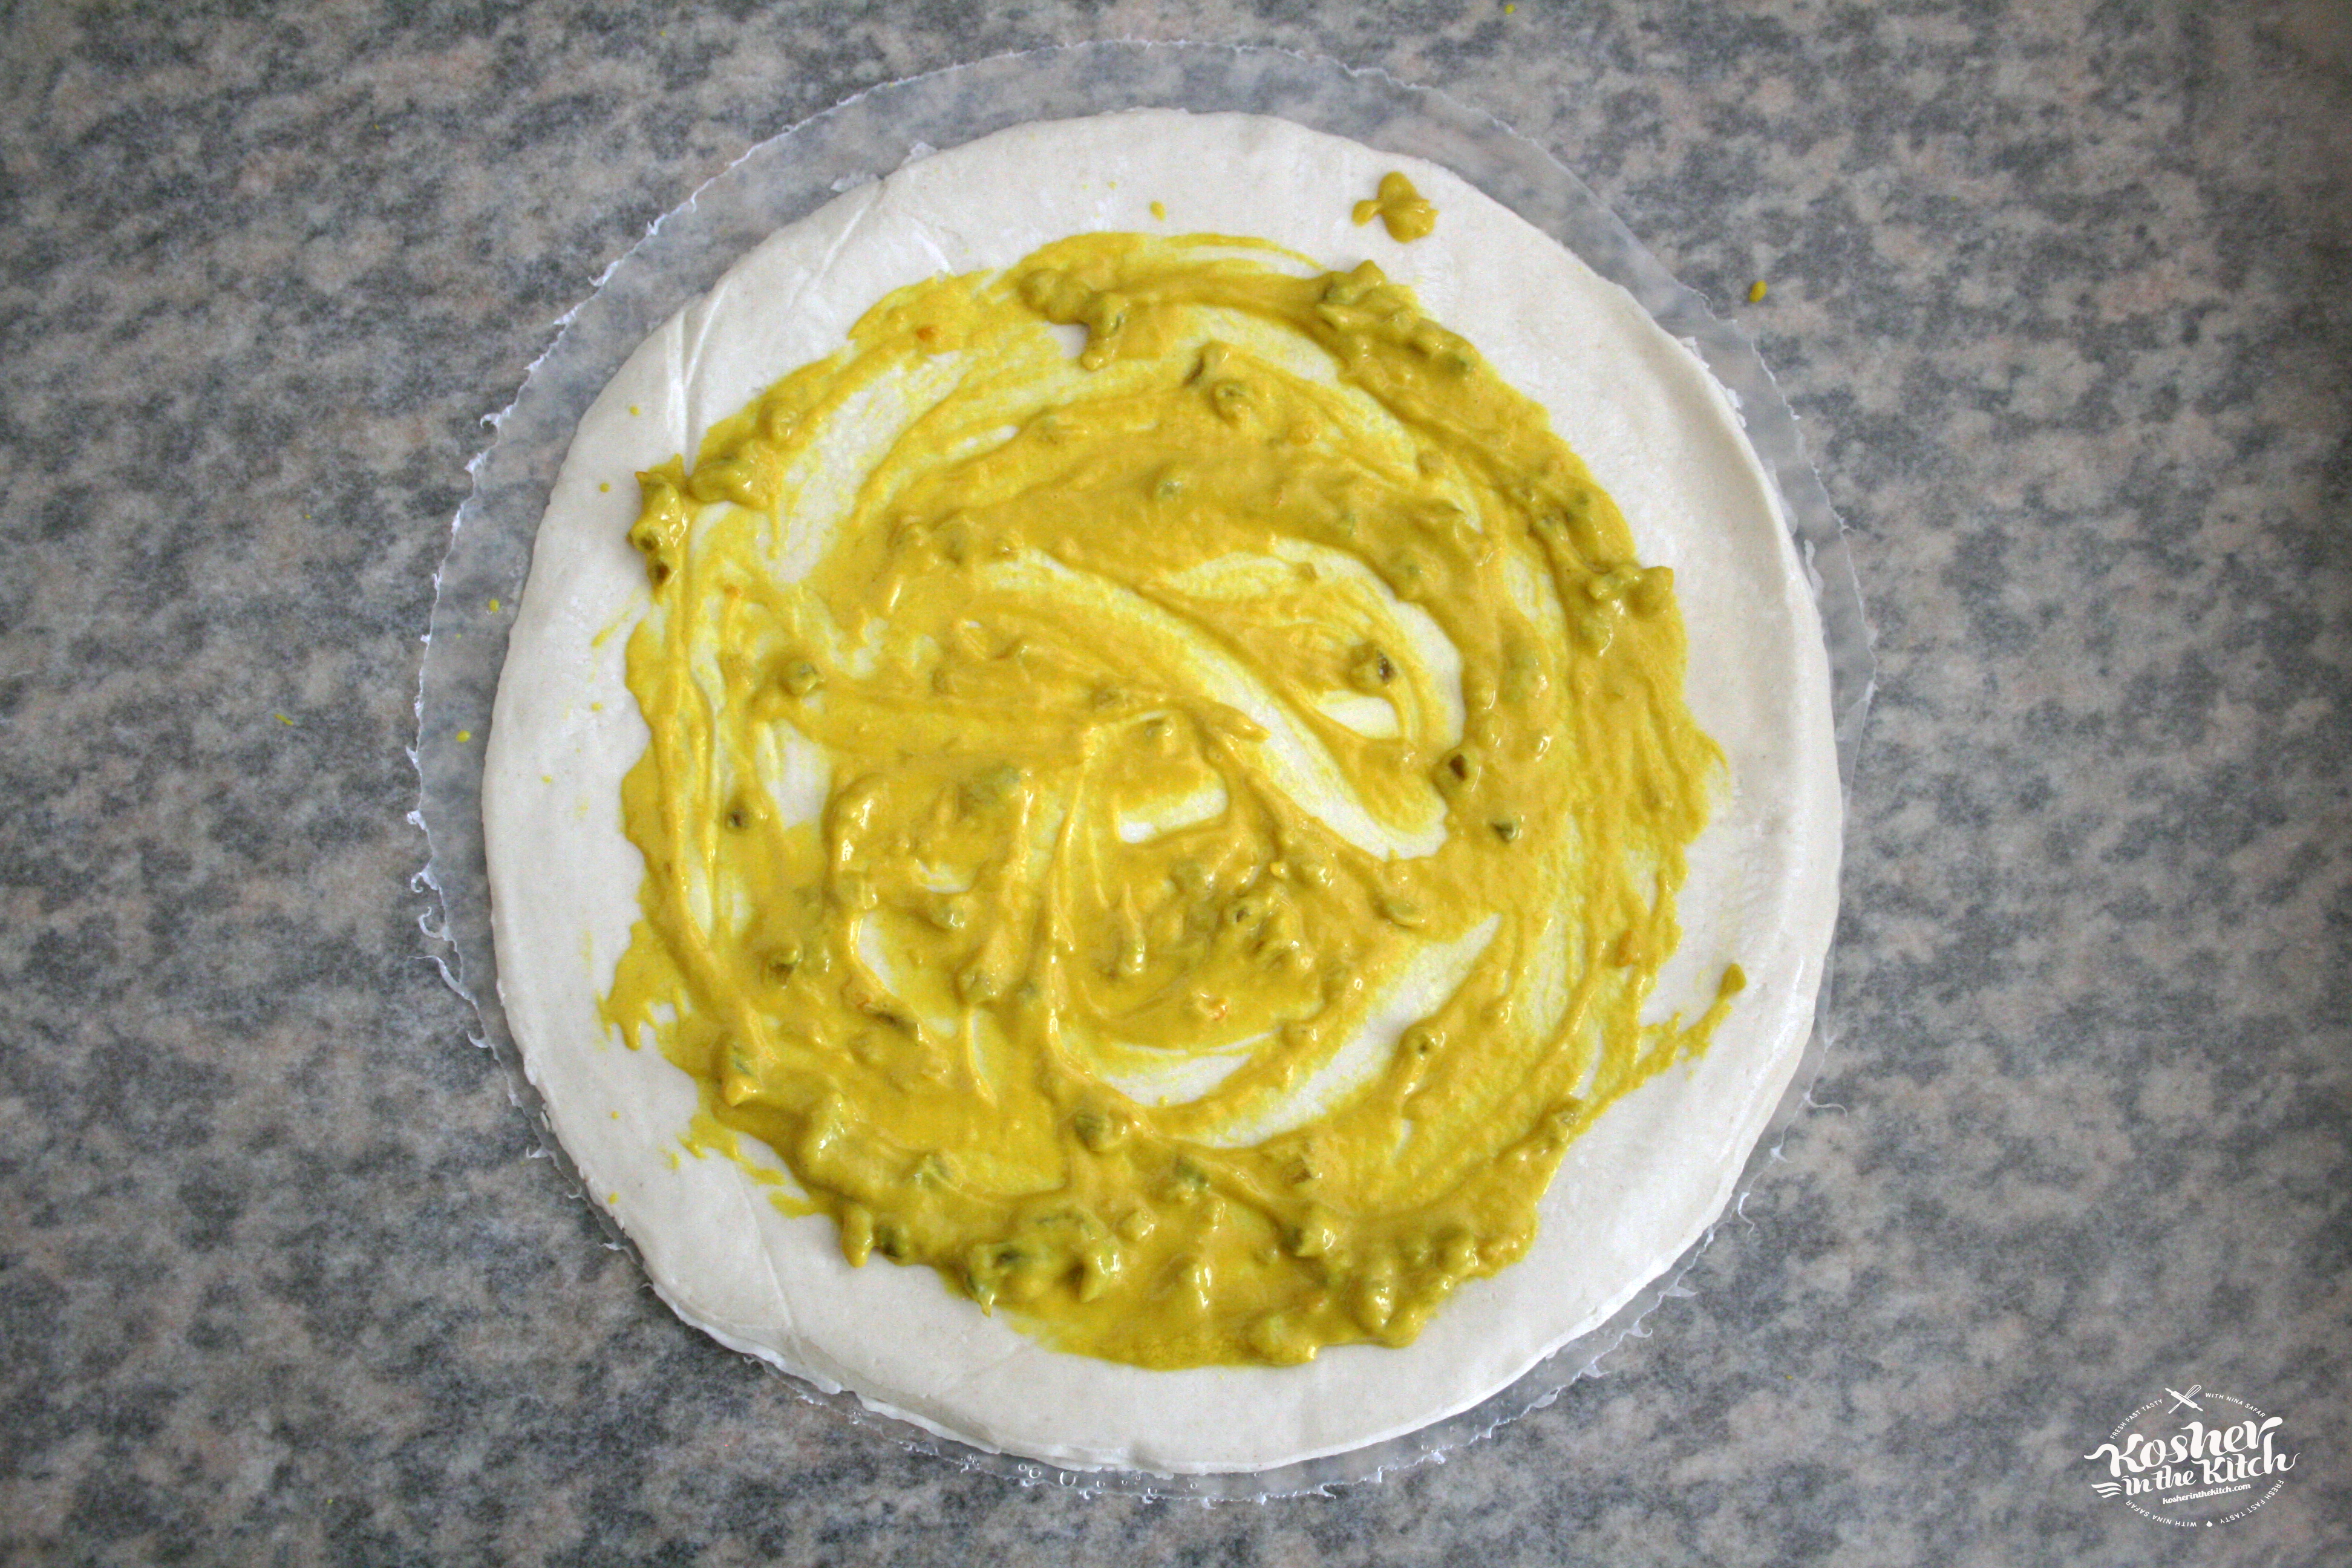 Spread mustard over dough